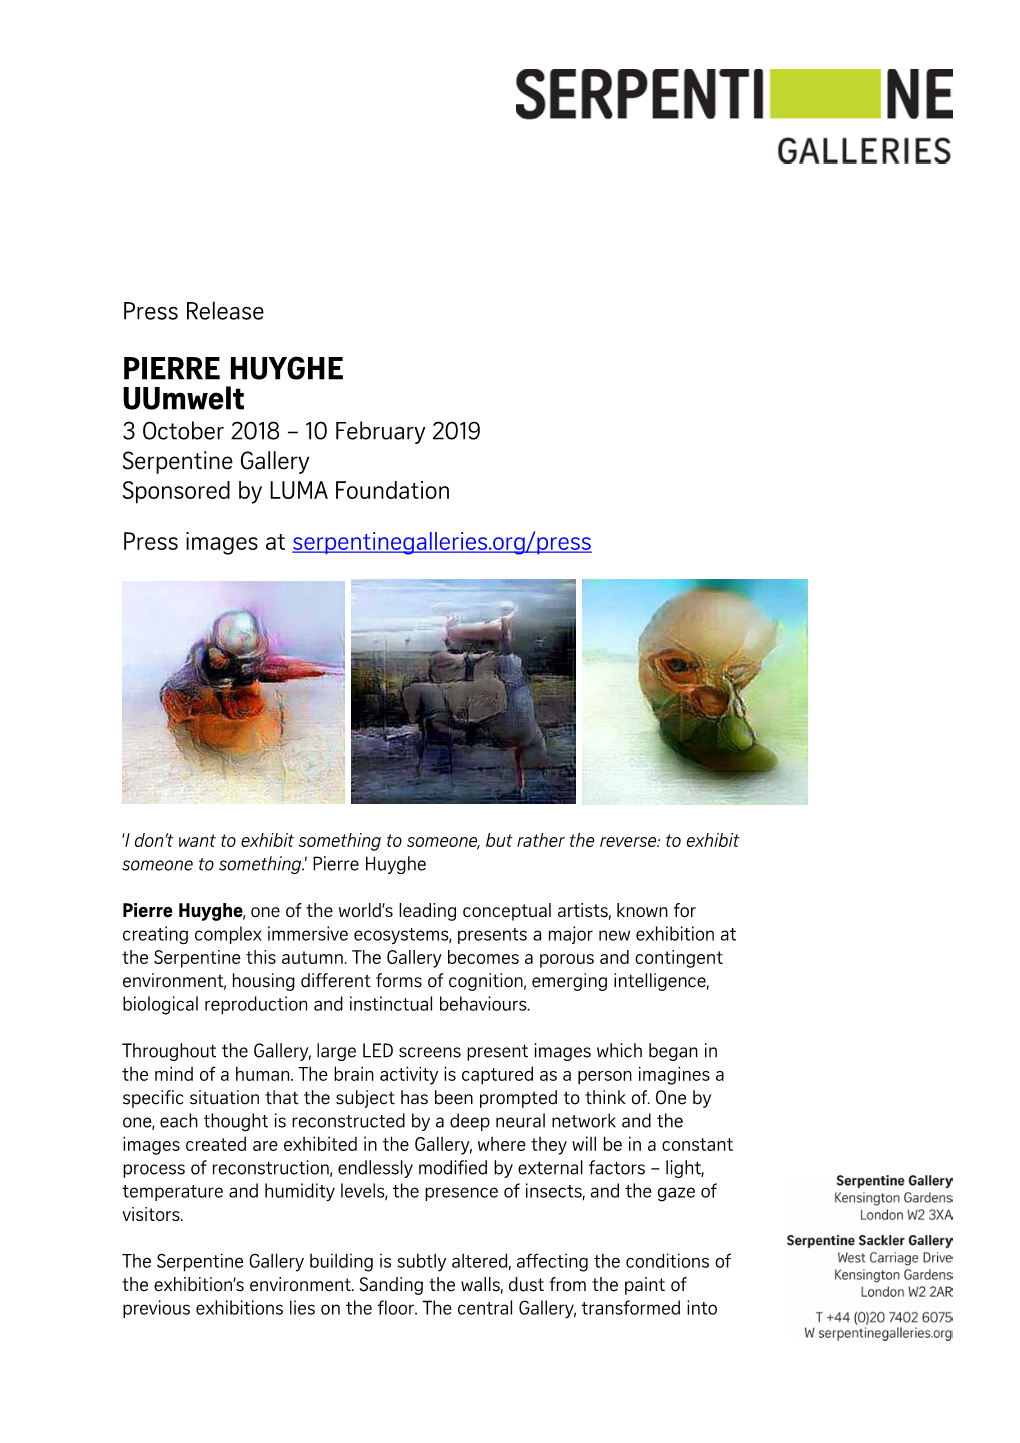 PIERRE HUYGHE Uumwelt 3 October 2018 – 10 February 2019 Serpentine Gallery Sponsored by LUMA Foundation